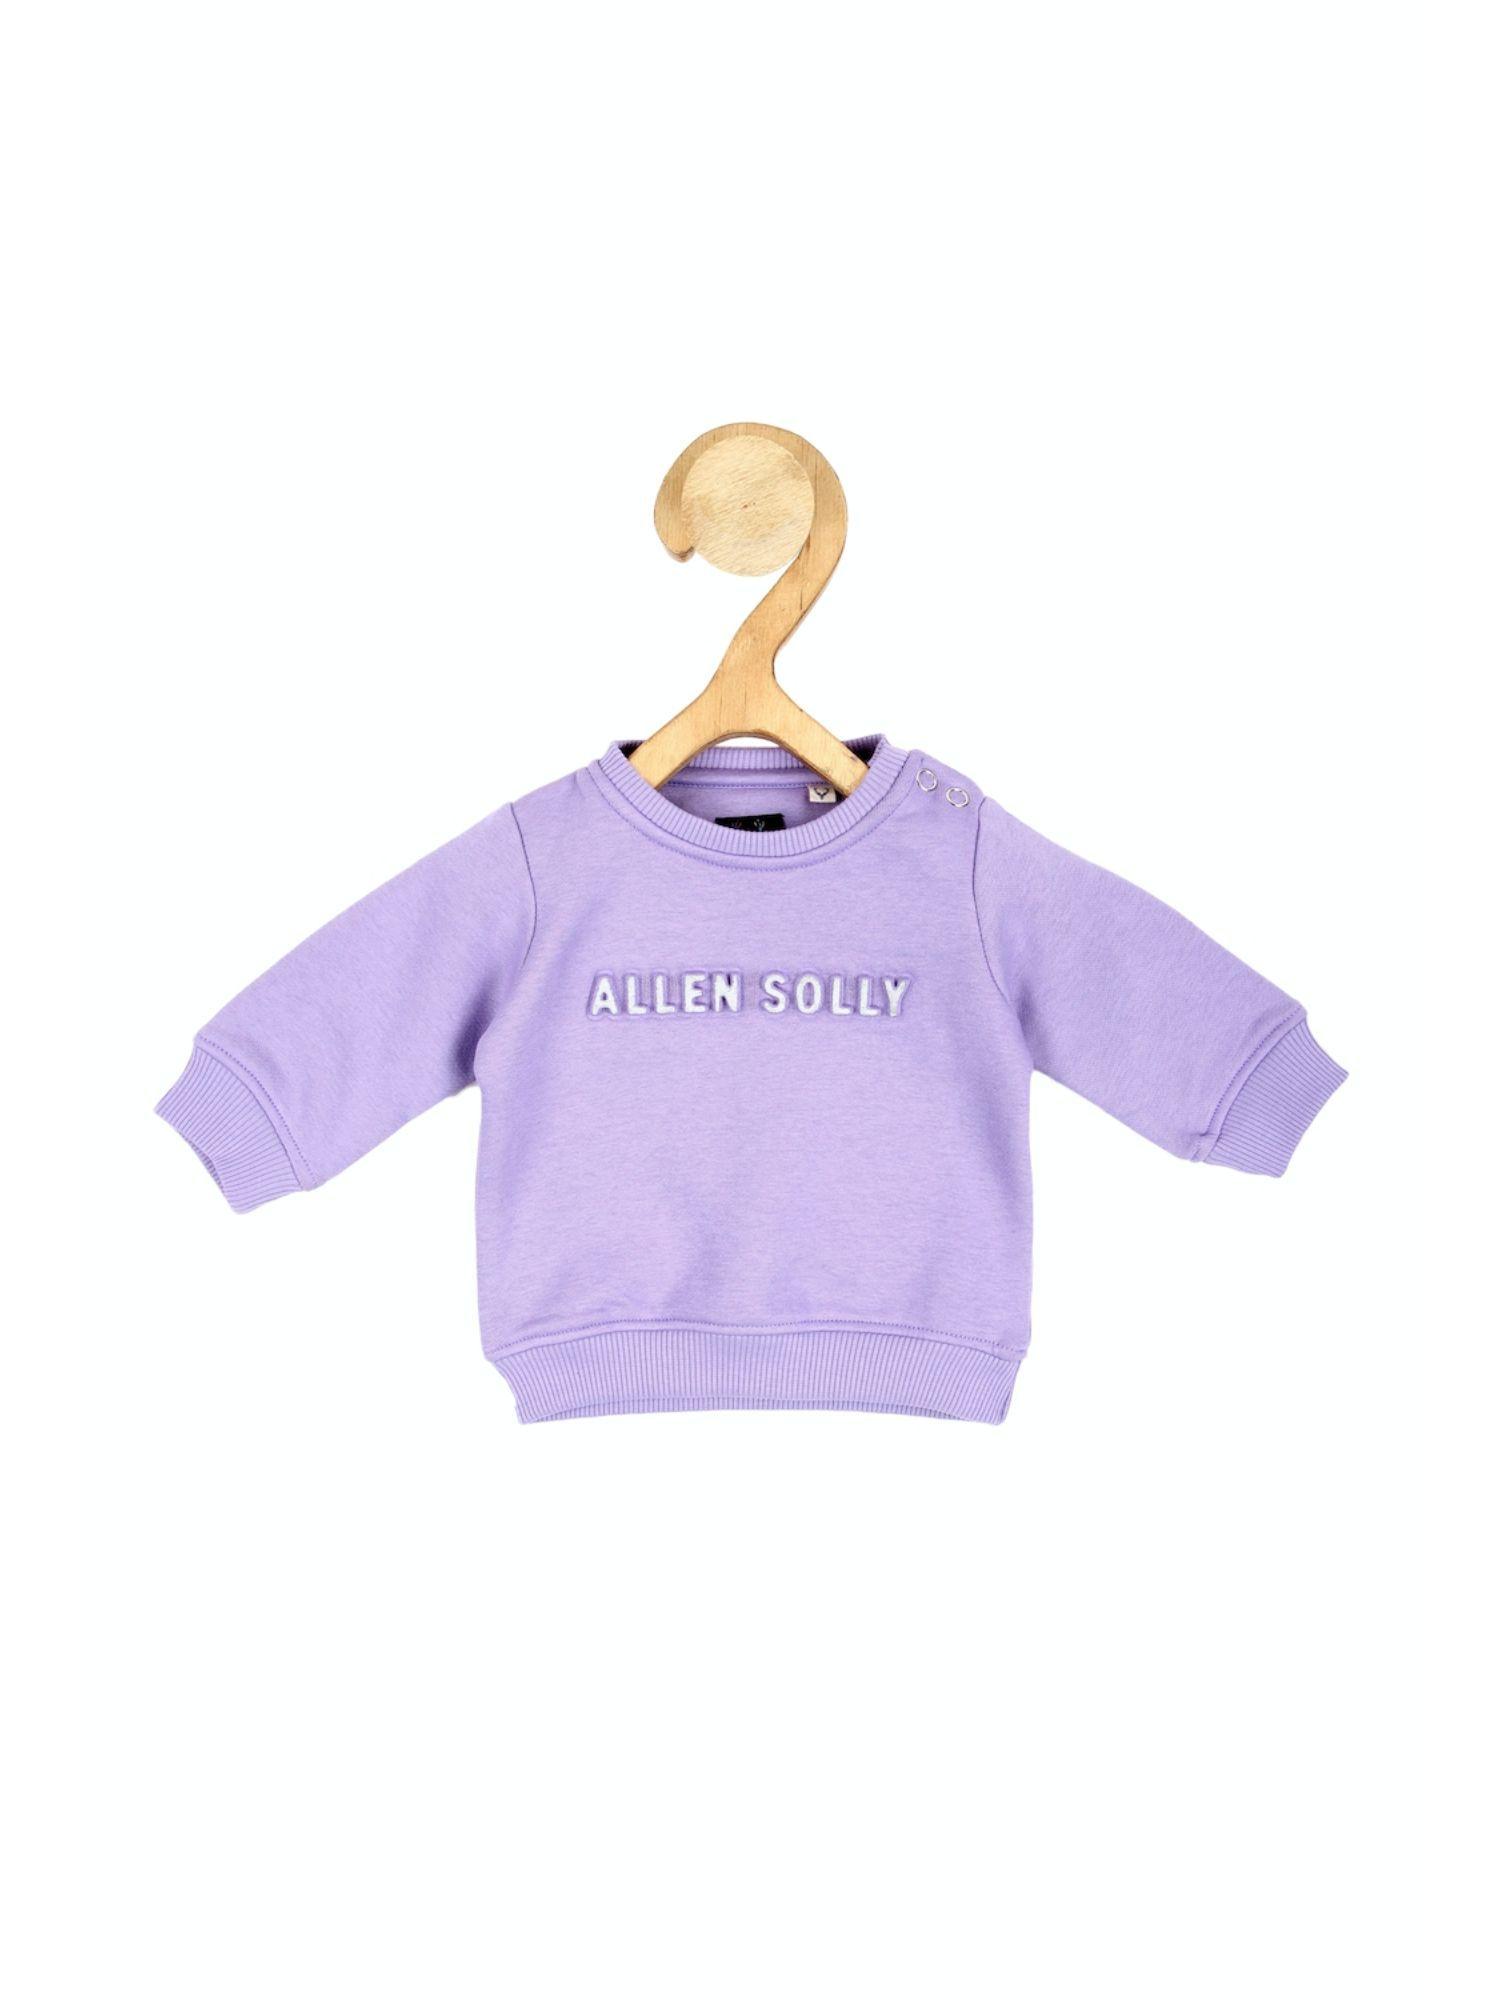 girls-purple-solid-regular-fit-sweatshirt